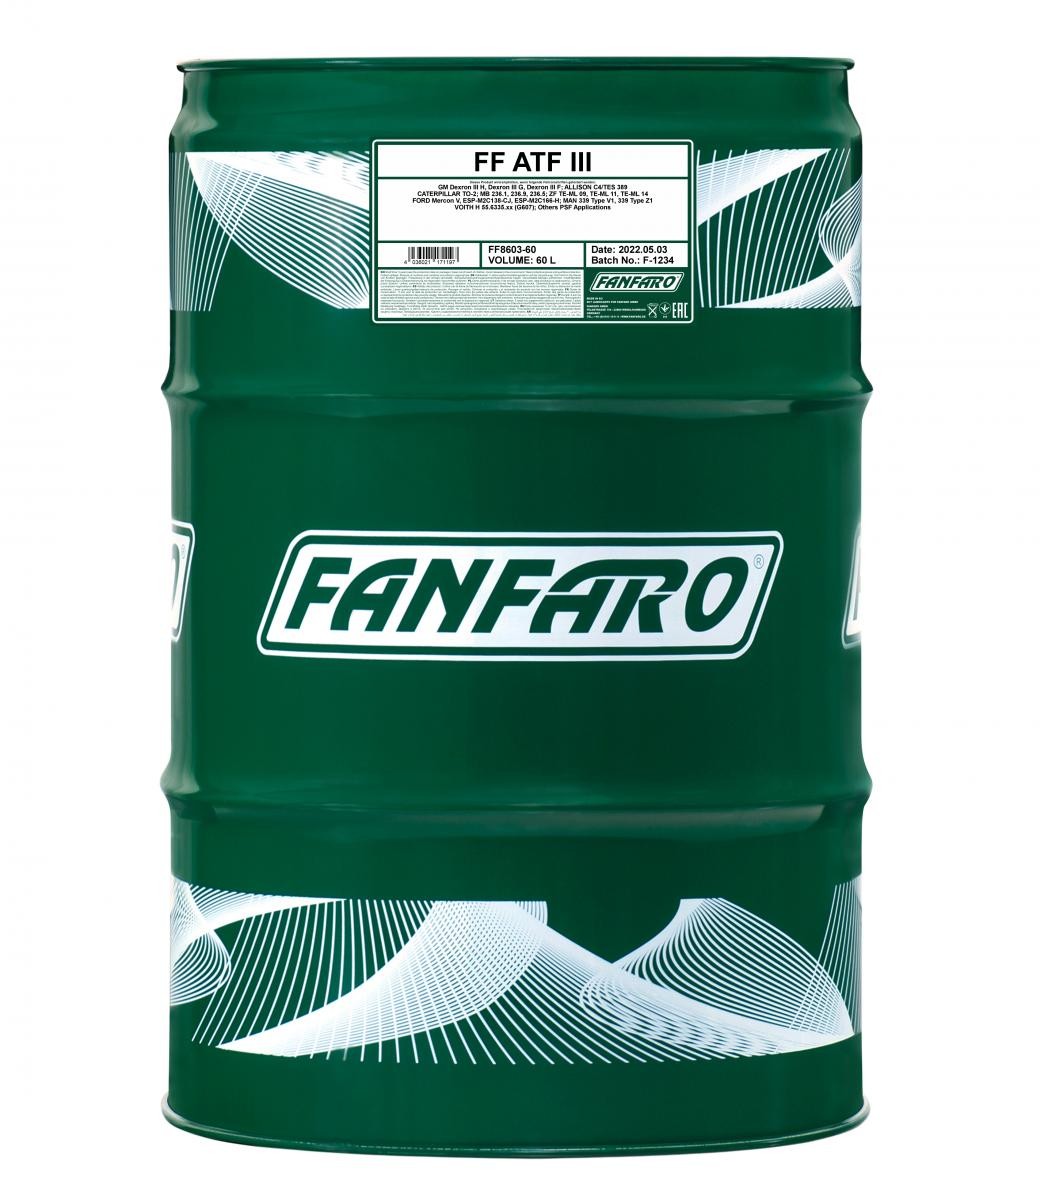 FF8603-60 FANFARO Automatikgetriebeöl DAF 55